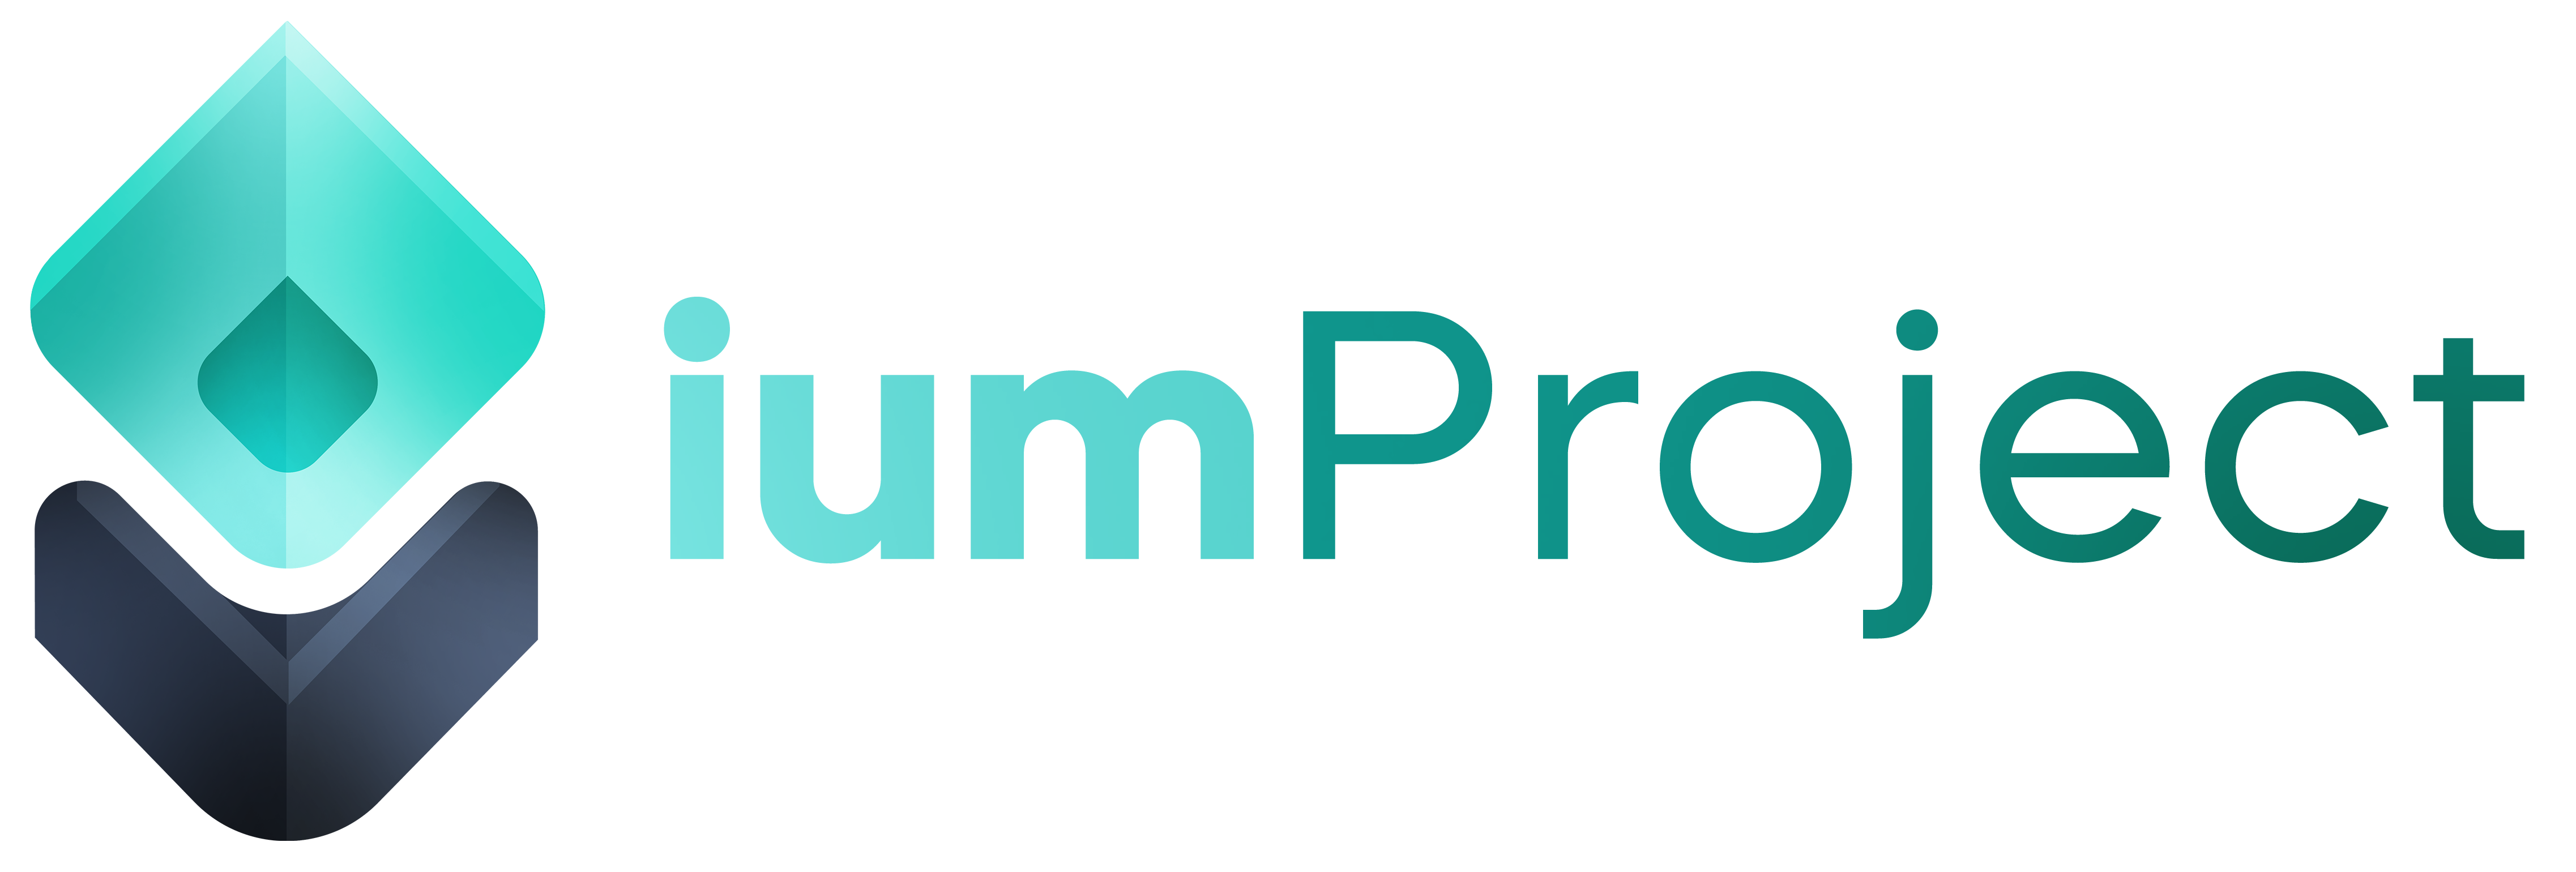 iumProject - Logo